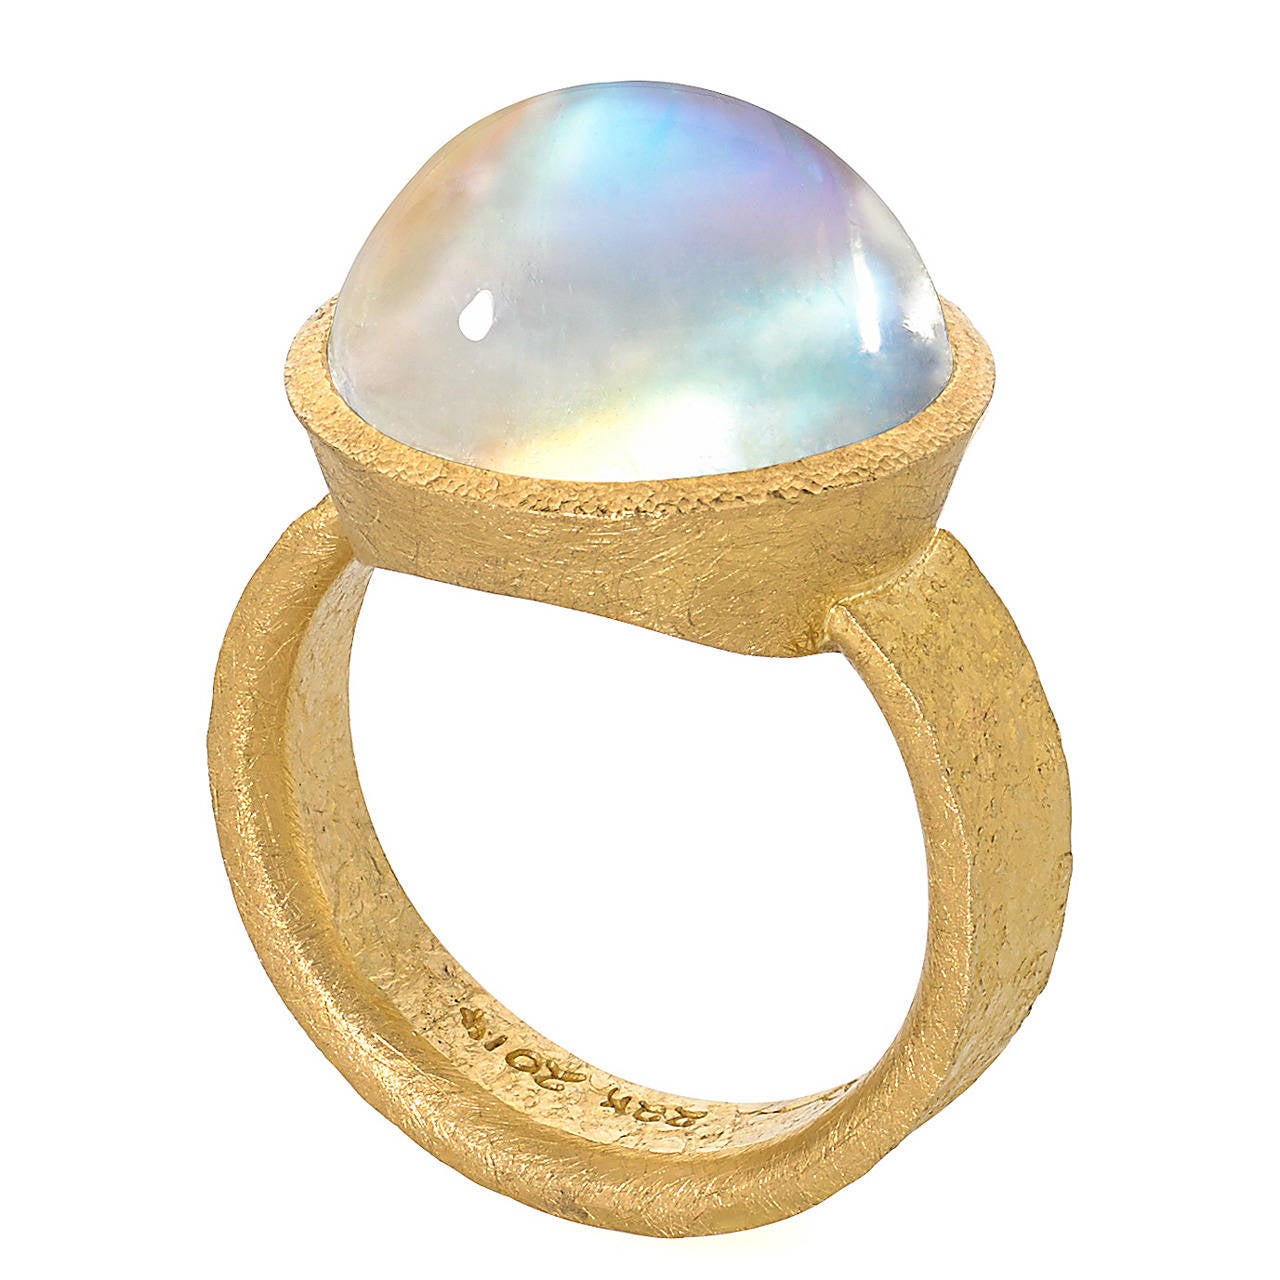 Devta Doolan Exceptional Quality Rainbow Moonstone Gold Ring